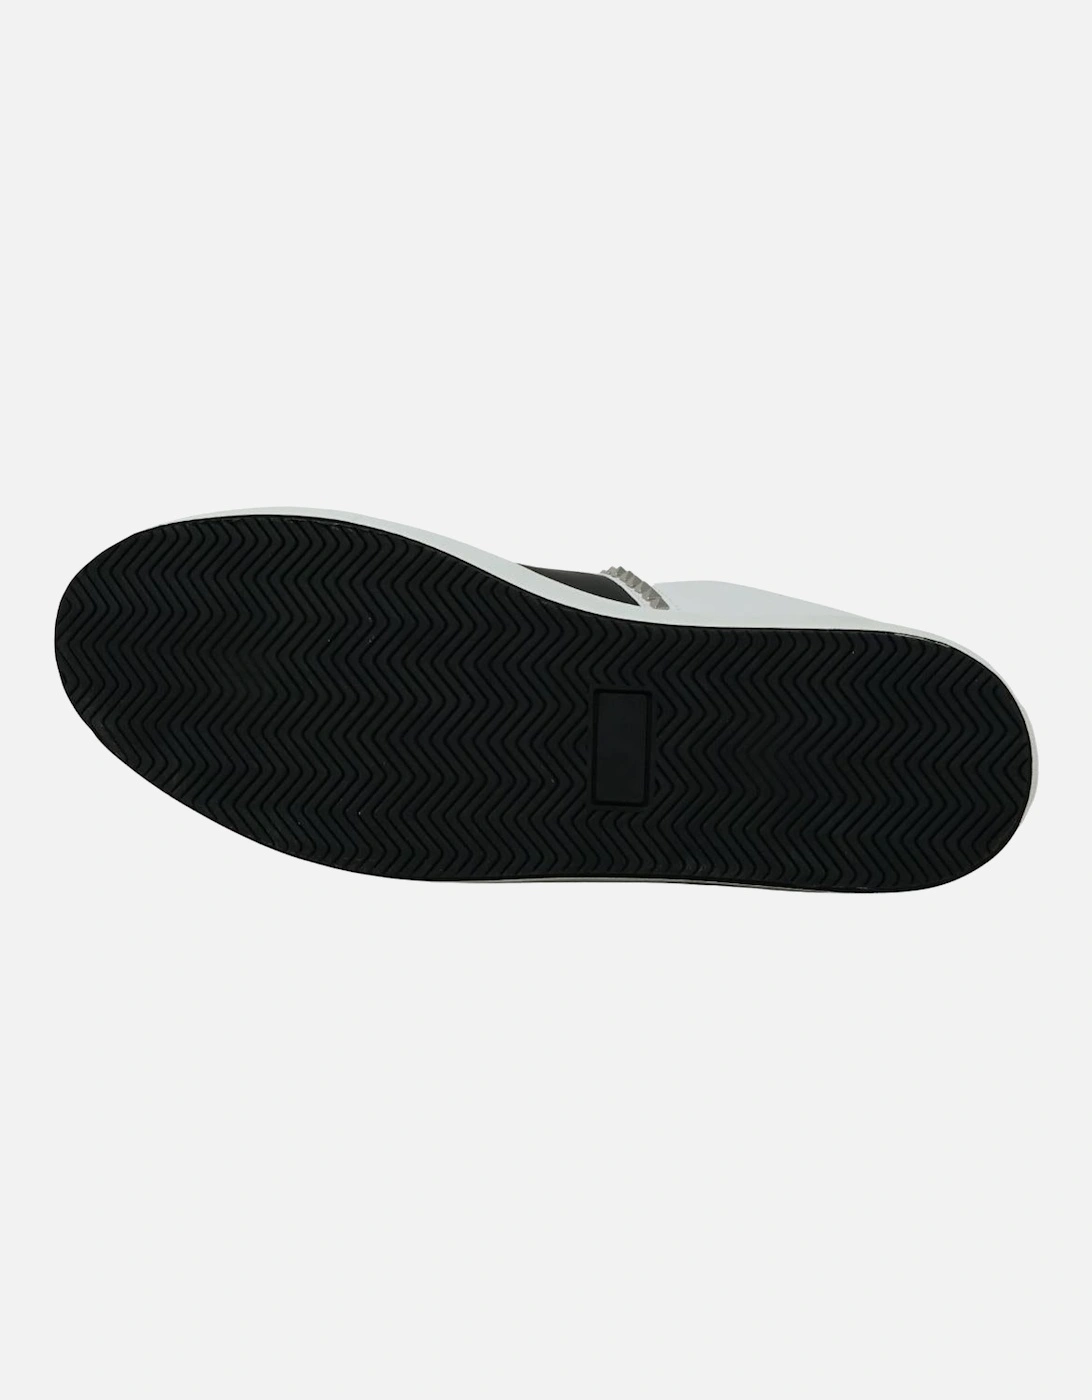 MSC1482 0102 "Brooks" White Sneakers